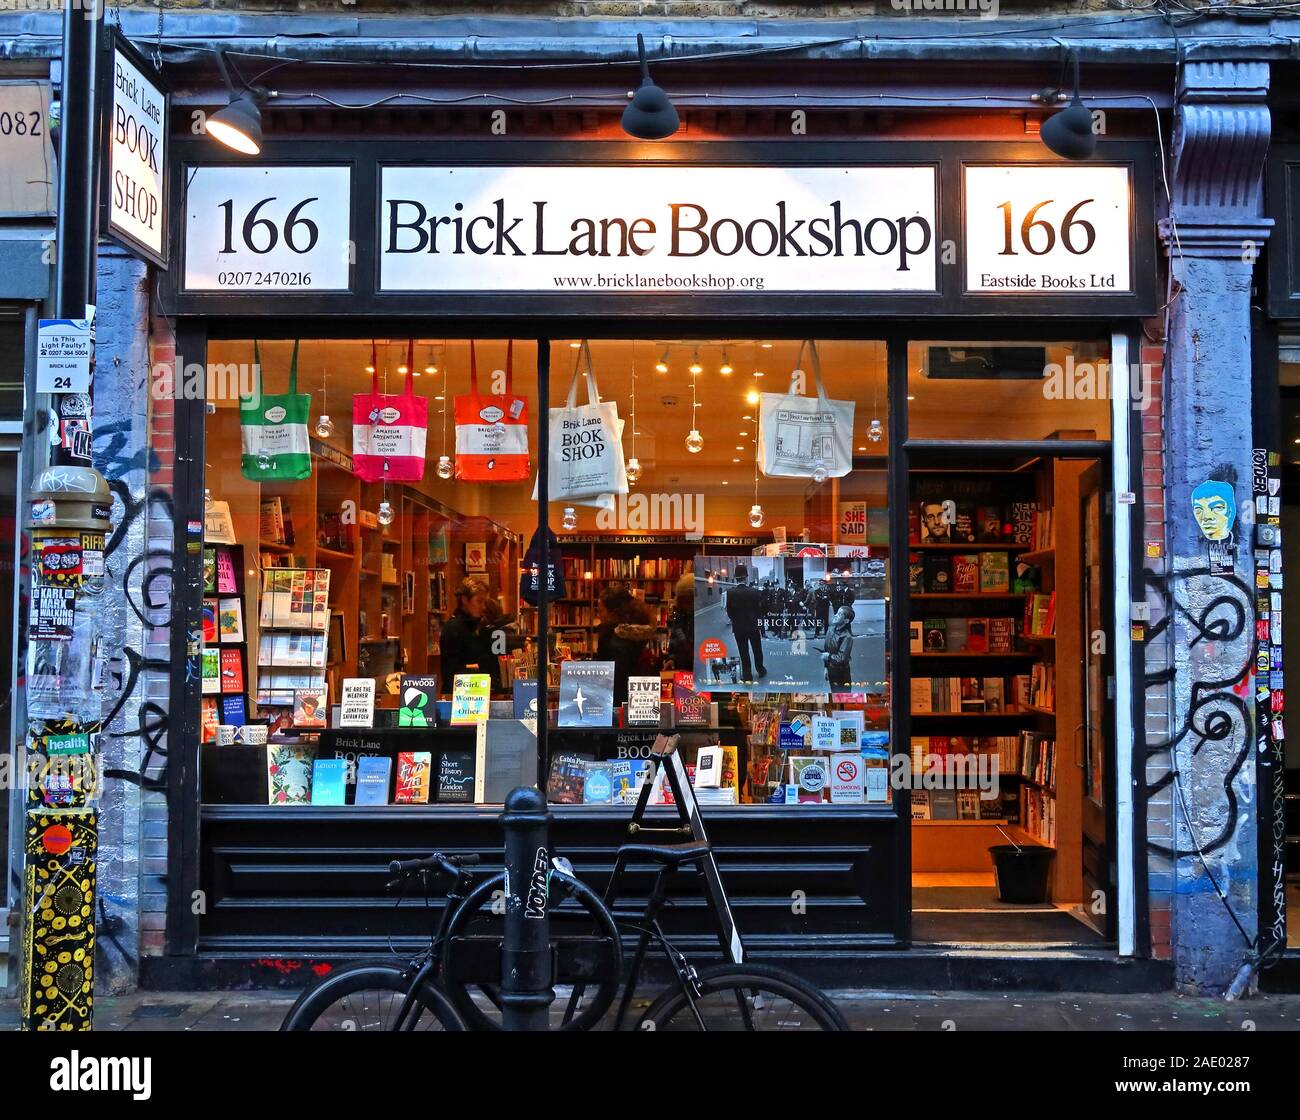 Eastside books ltd - 166 Brick Lane Bookshop, Brick Lane, near Spitalfields, east end,London,England,UK, E1 6RU Stock Photo